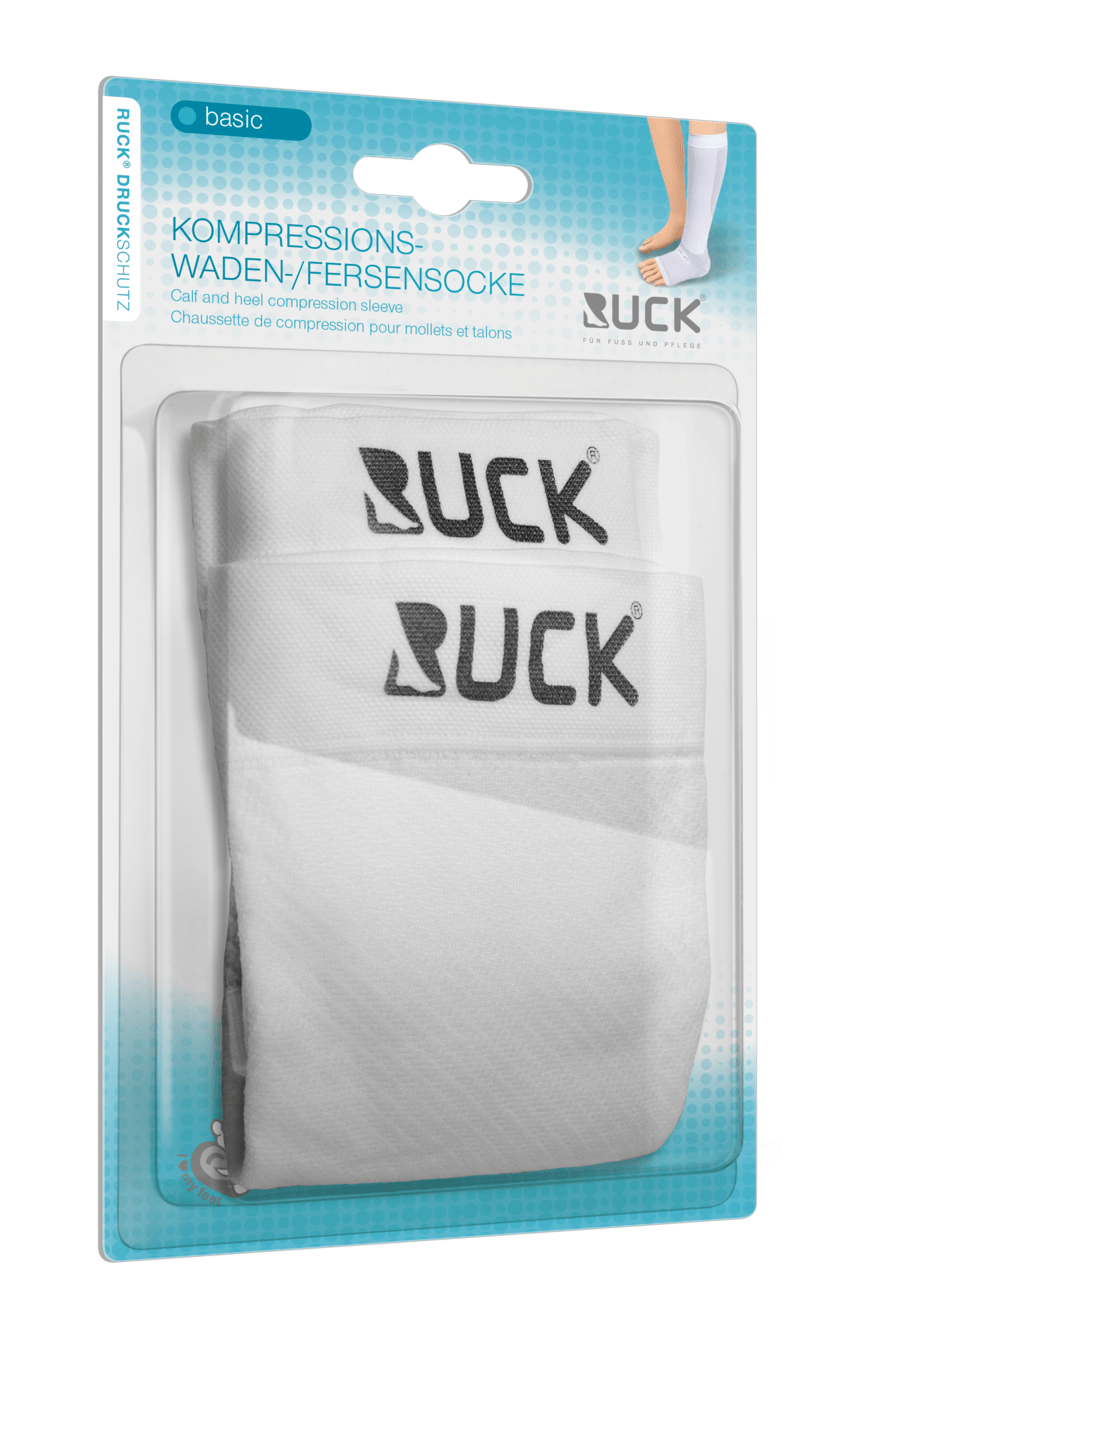 RUCK DRUCKSCHUTZ - Kompressionswaden- und Fersensocke